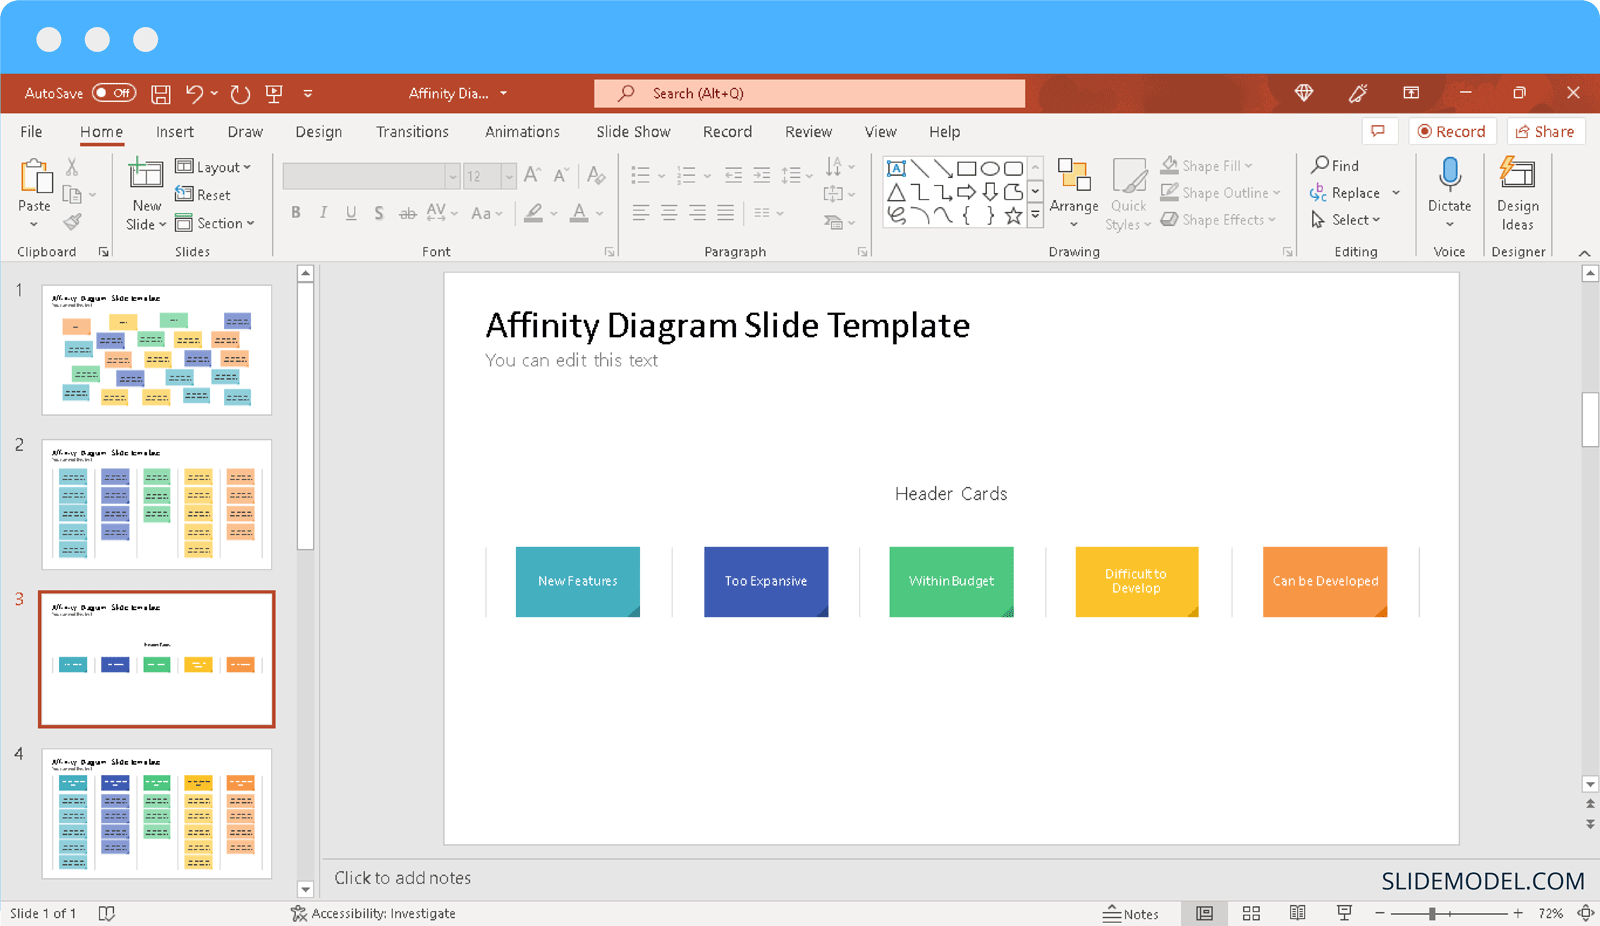 Affinity Diagram Slide Template Example by SlideModel